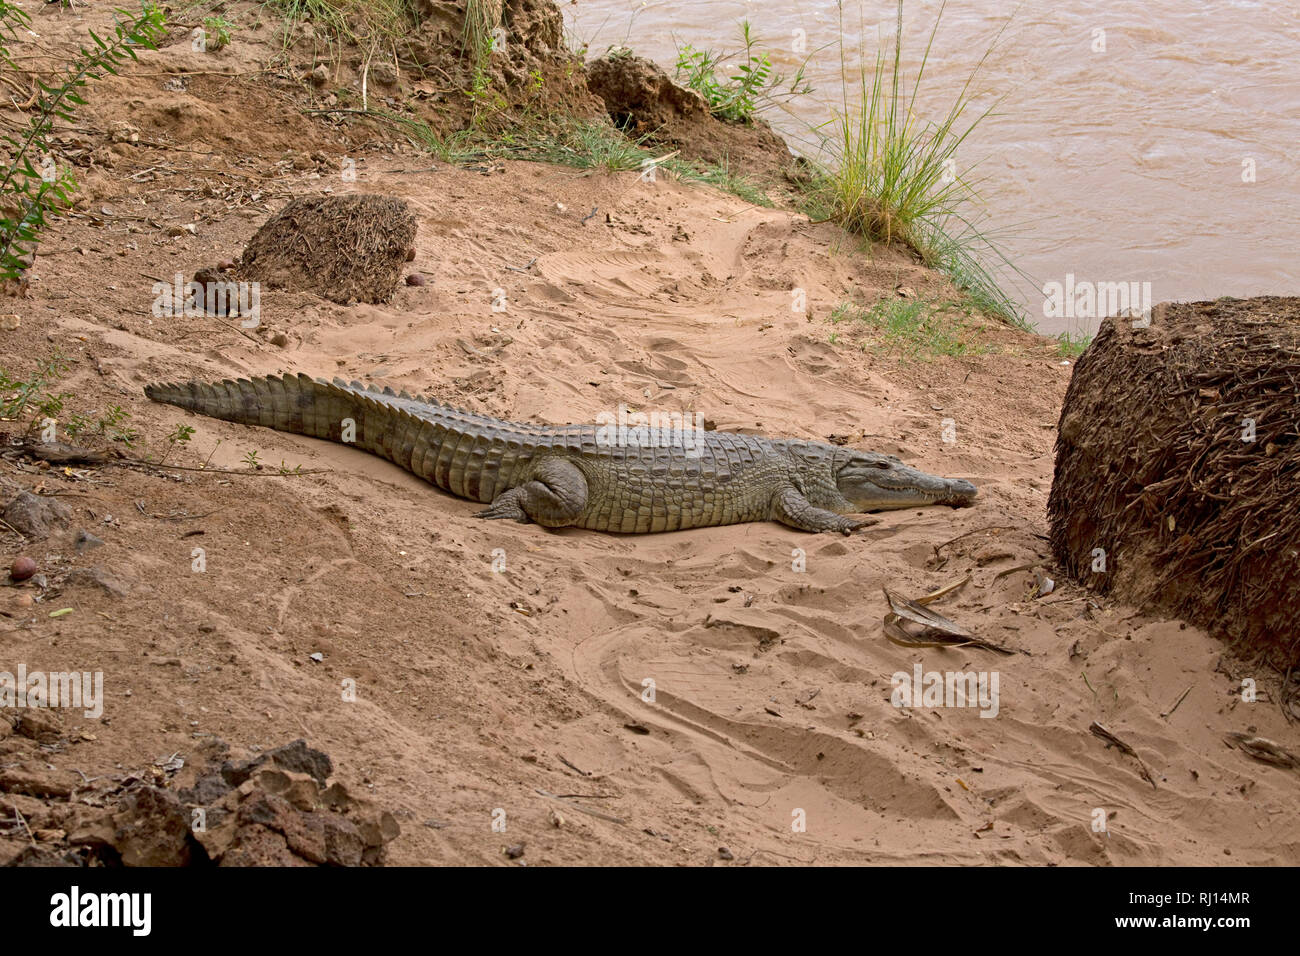 Ein nilkrokodil Crocodylus niloticus, ruht auf Sandbank mit Ewaso Nyiro Flusses, Shaba National Reserve, Kenia Stockfoto